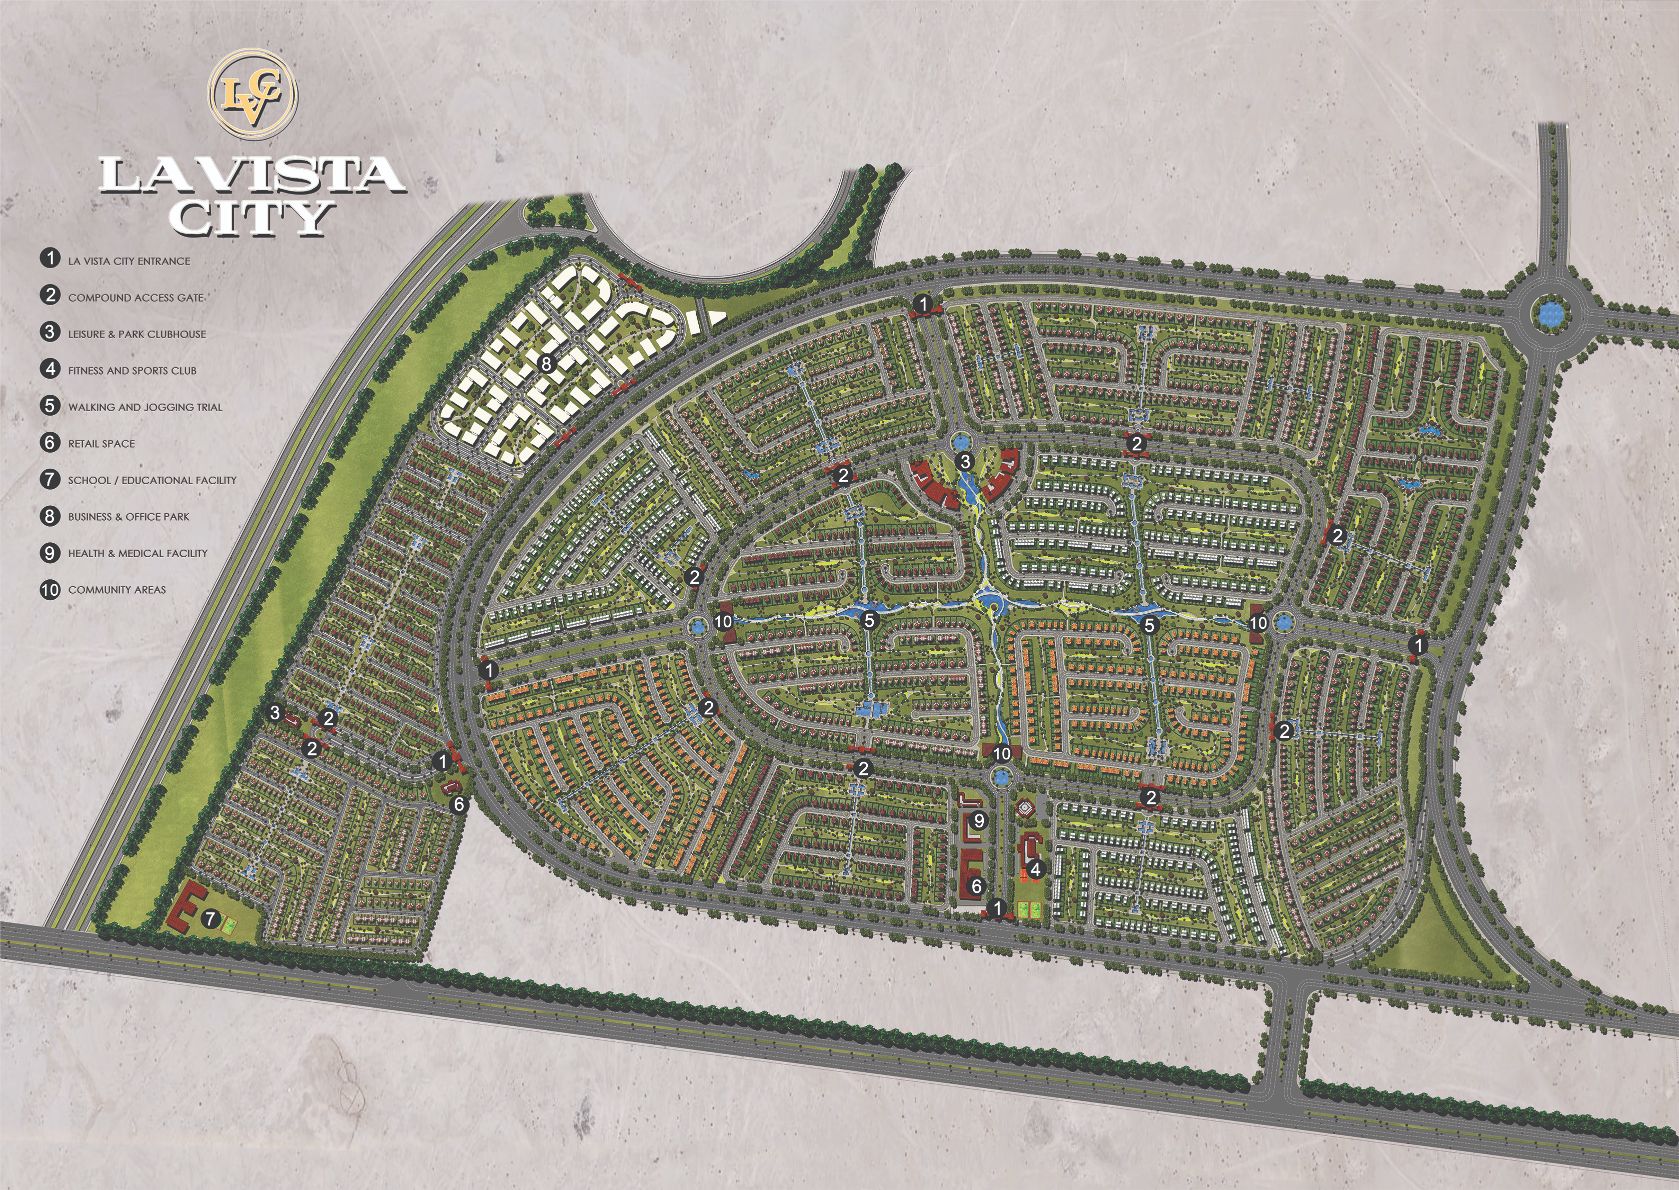 La Vista City Master Plan